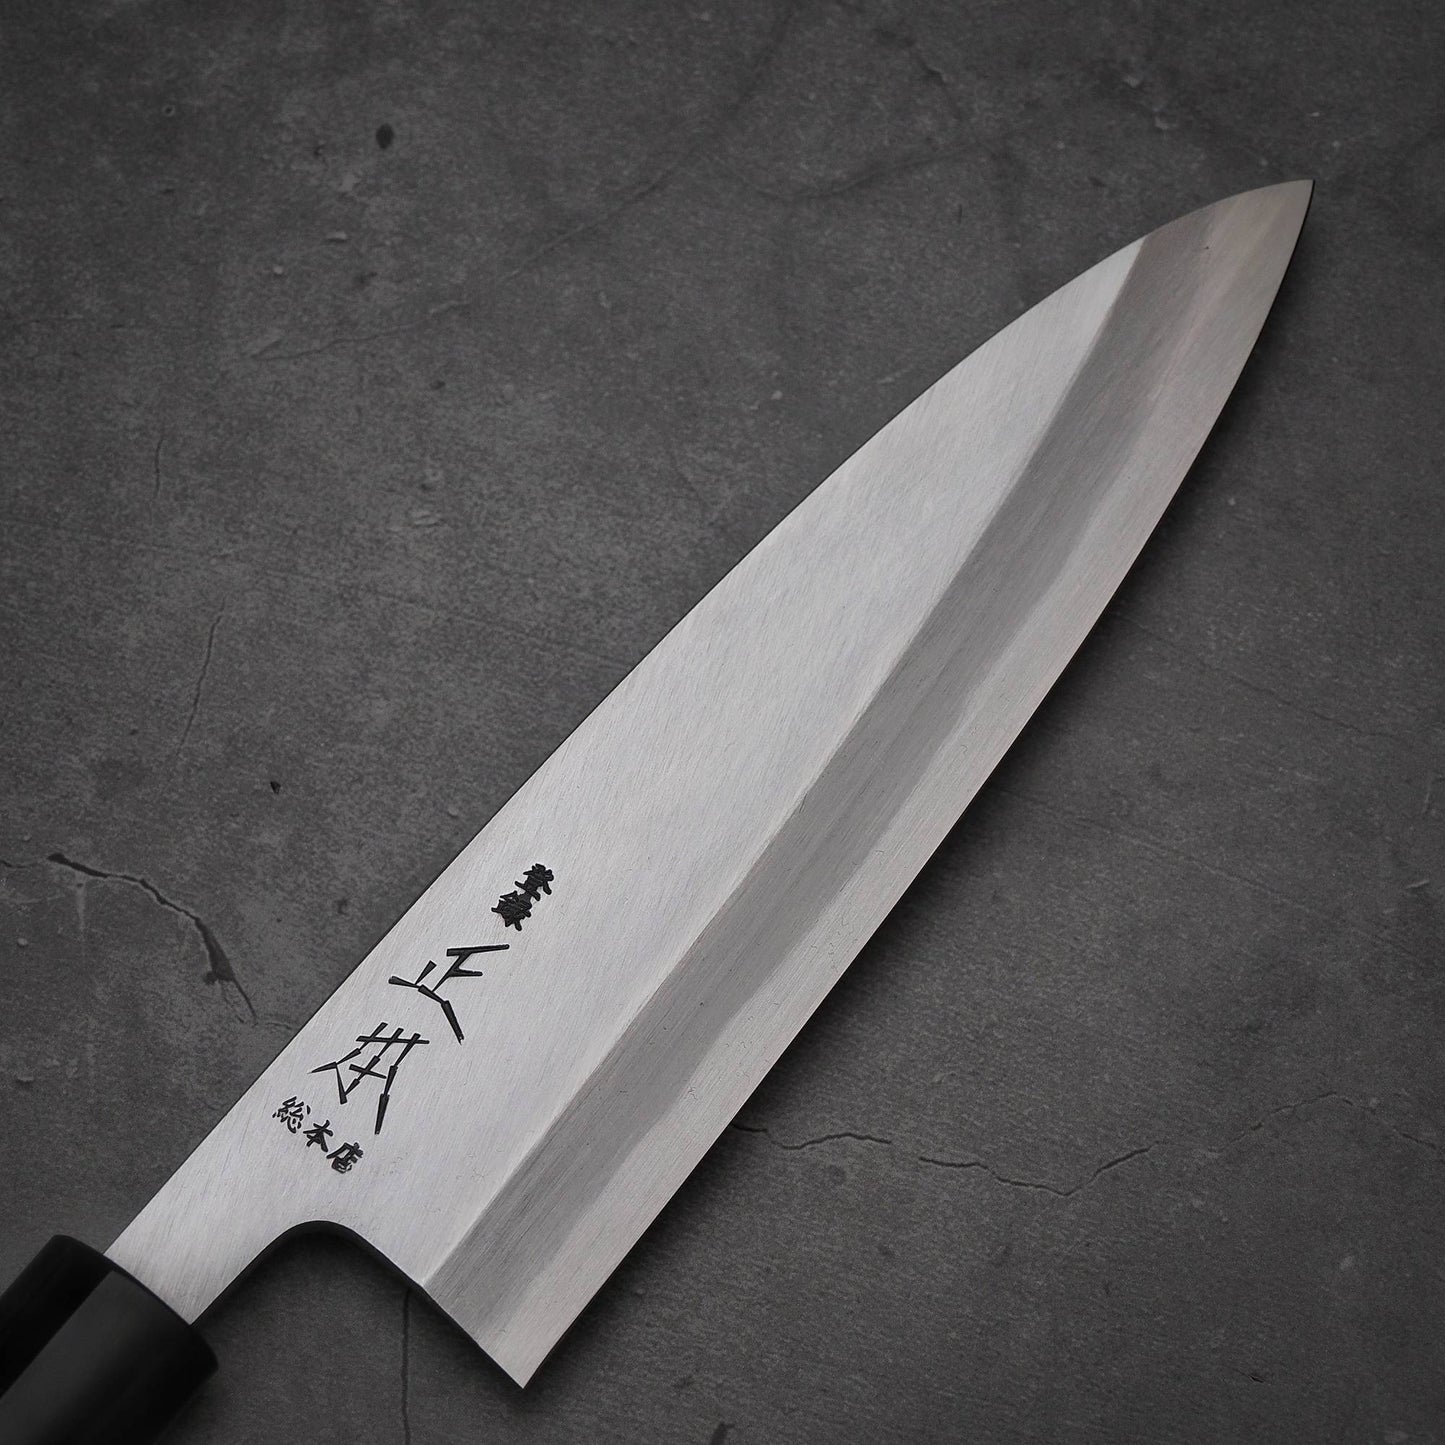 Close up view of the blade of Masamoto KS shirogami#2 ai-deba knife